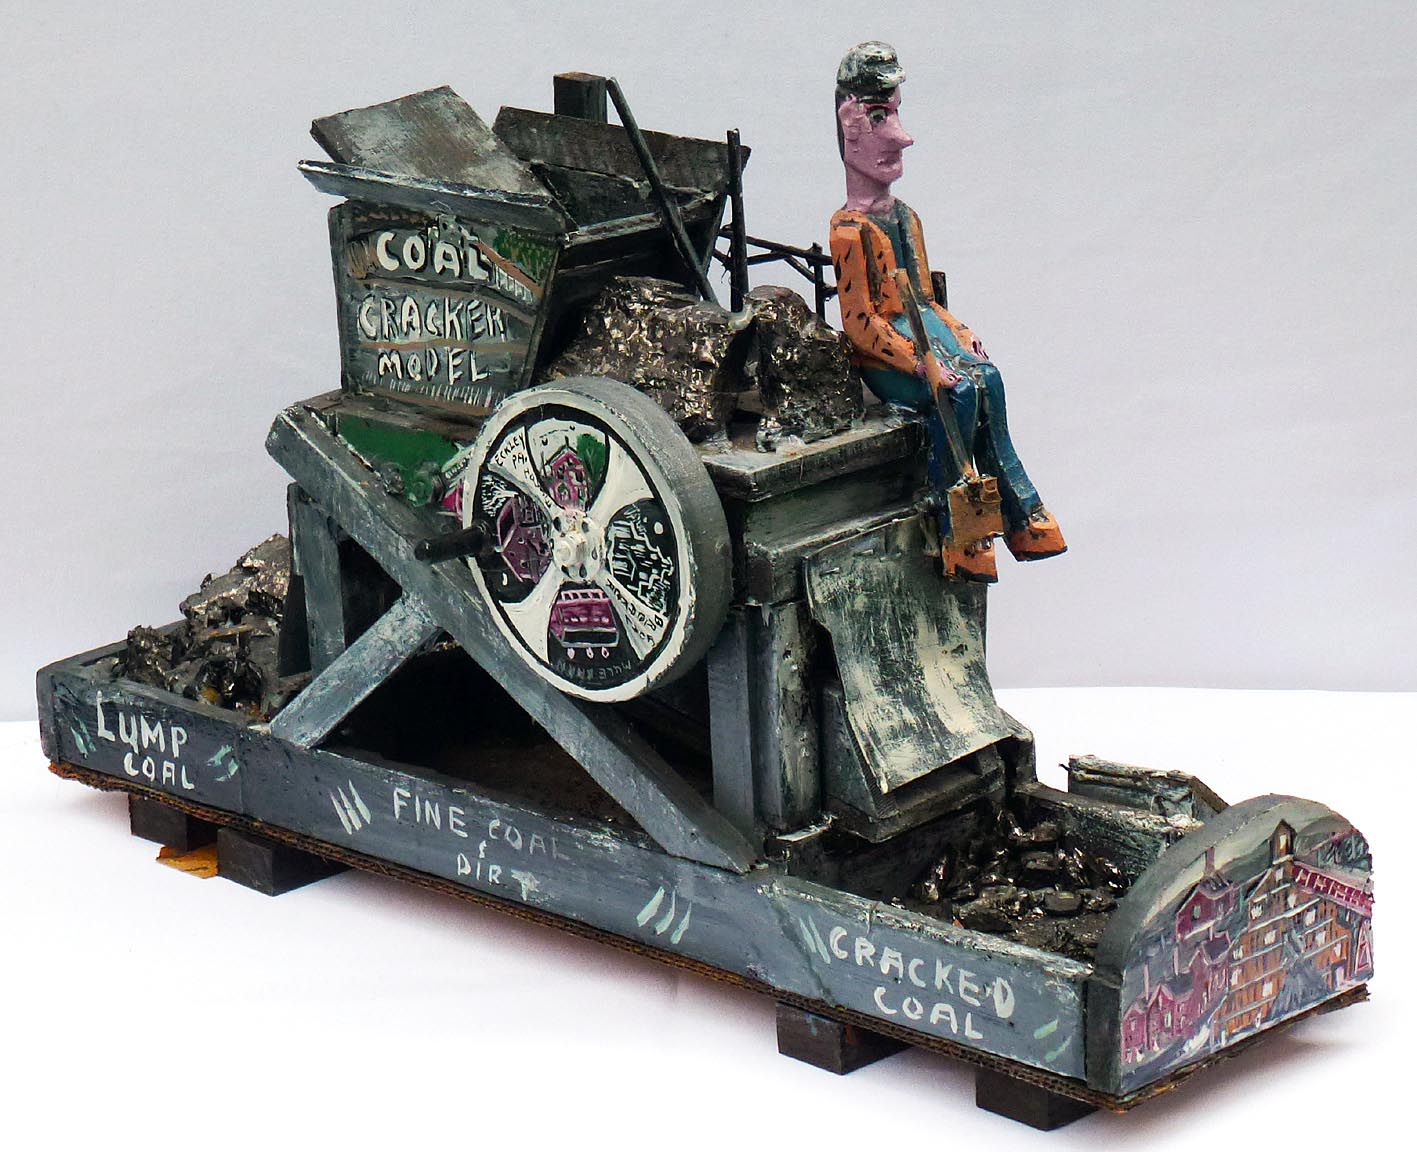 Coal cracker model by Jim Popso